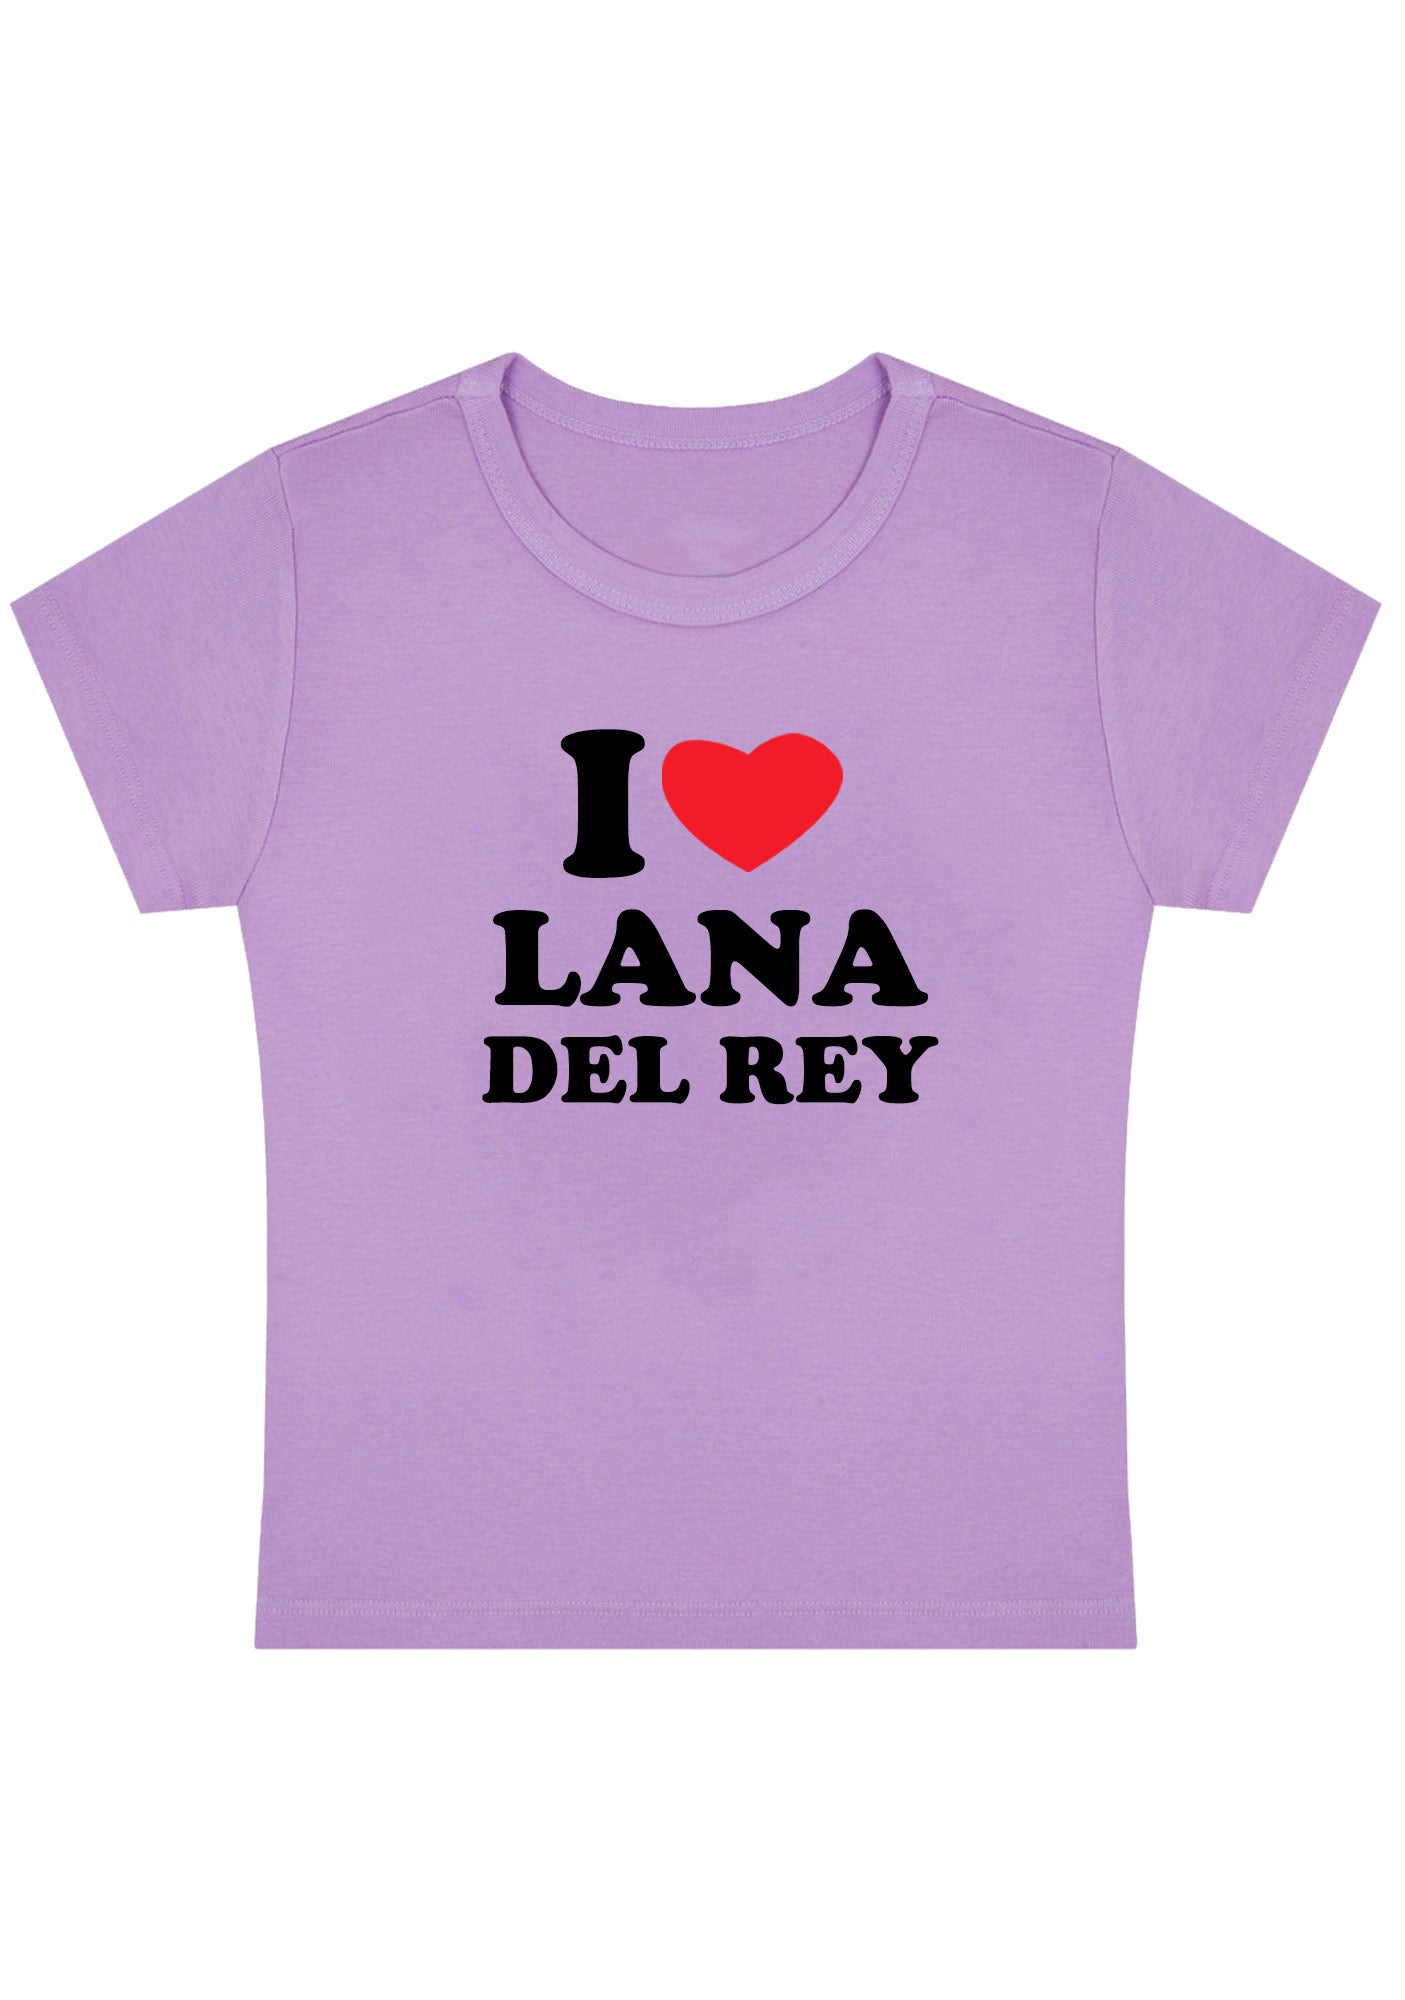 Curvy I Love Lanx Del Rey Baby Tee